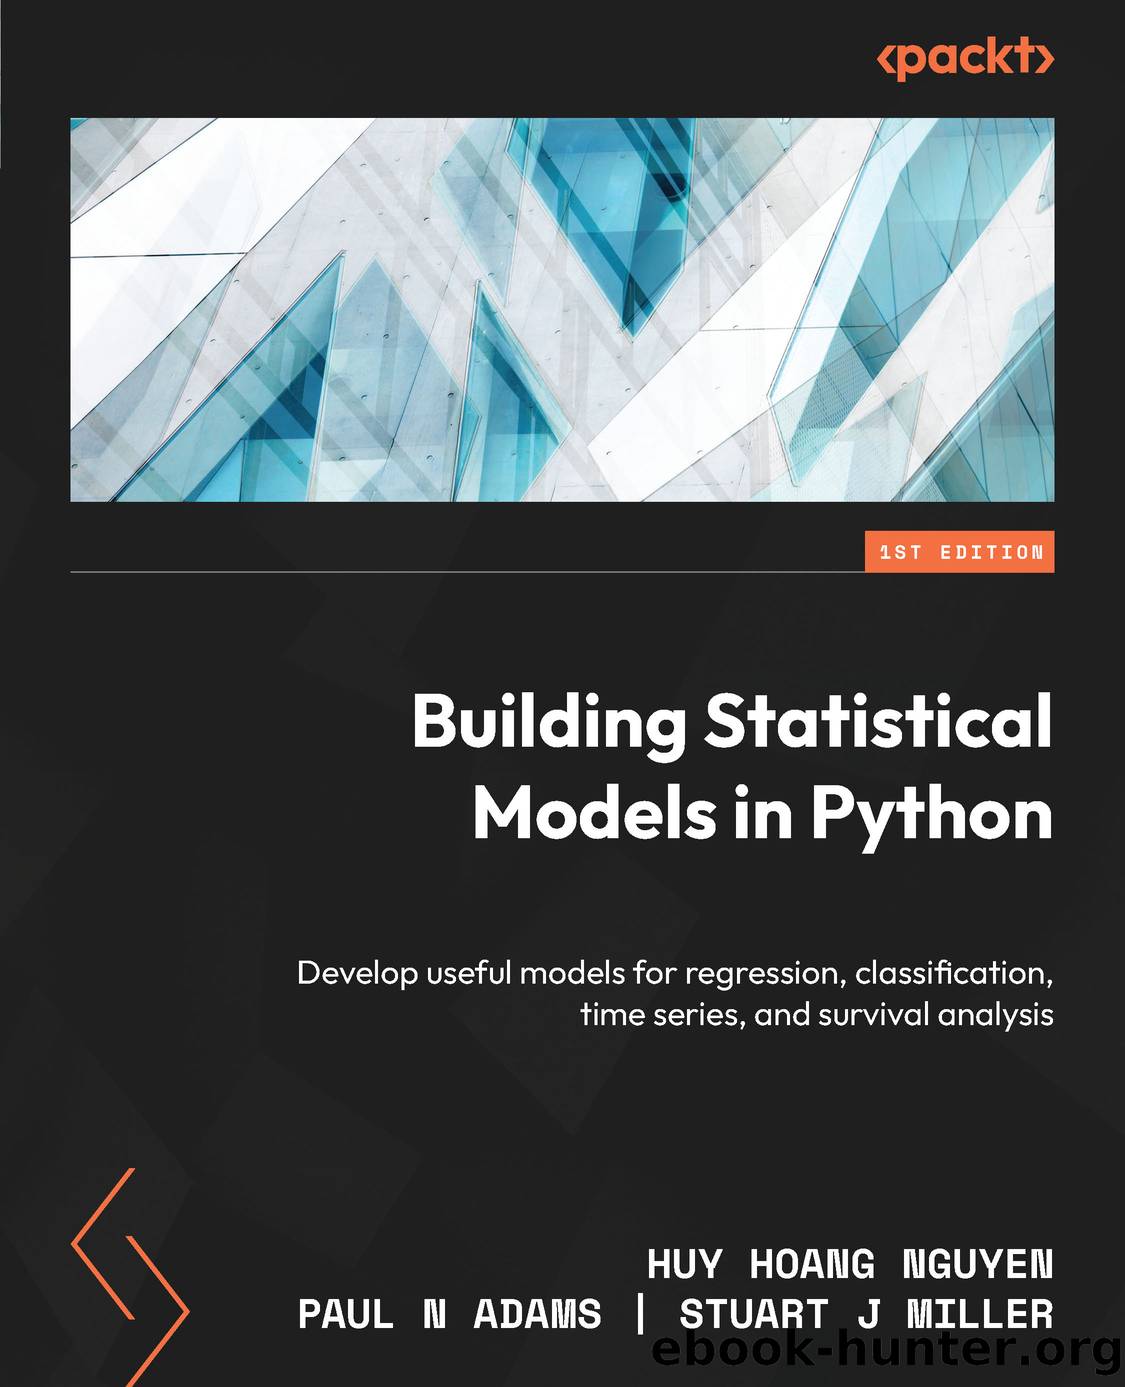 Building Statistical Models in Python by Huy Hoang Nguyen & Paul N Adams & Stuart J Miller